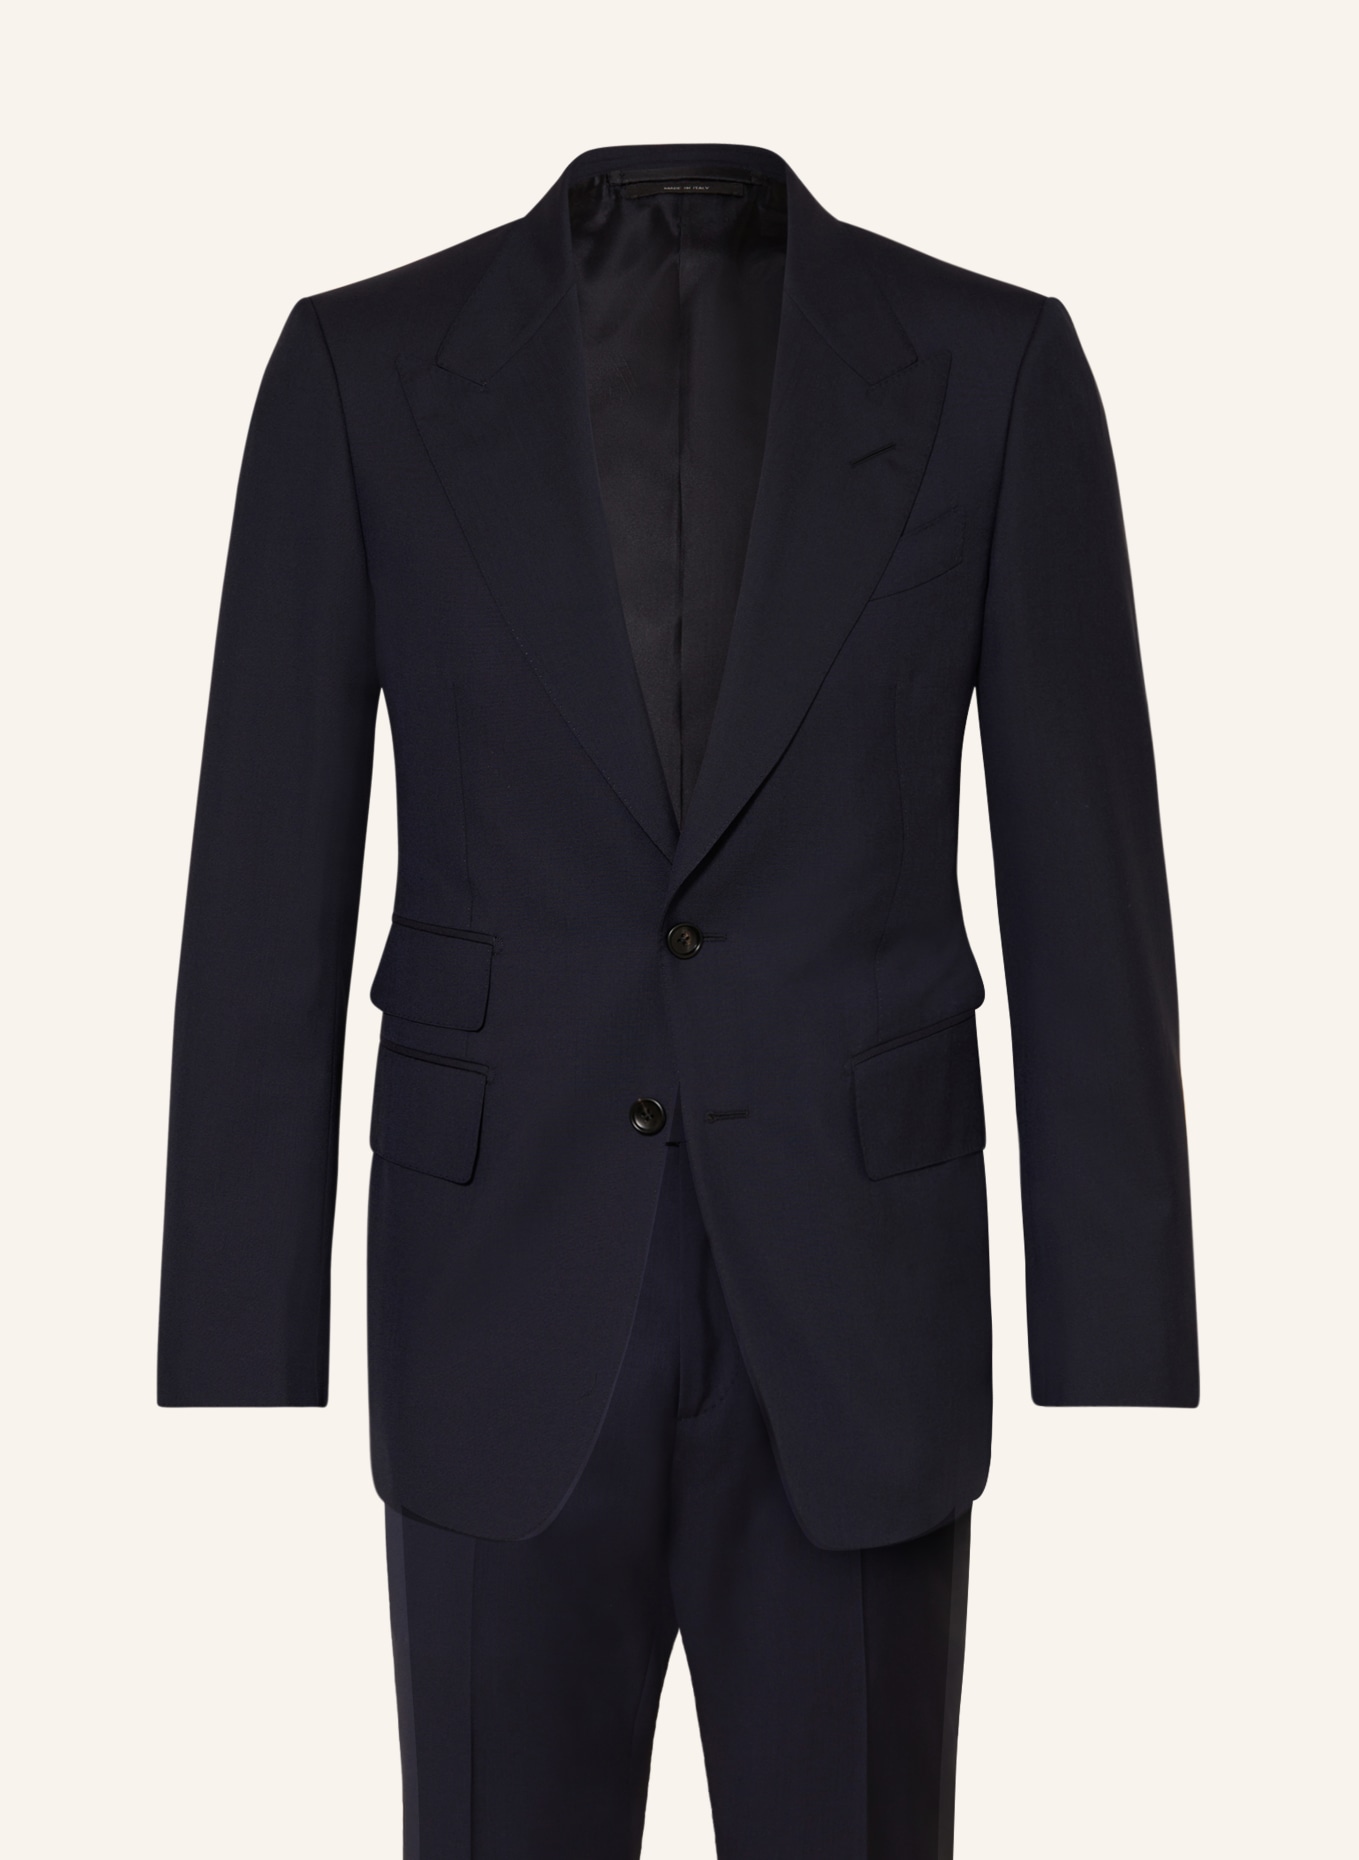 TOM FORD Anzug SHELTON Extra Slim Fit, Farbe: HB740 MIDNIGHT BLEU (Bild 1)